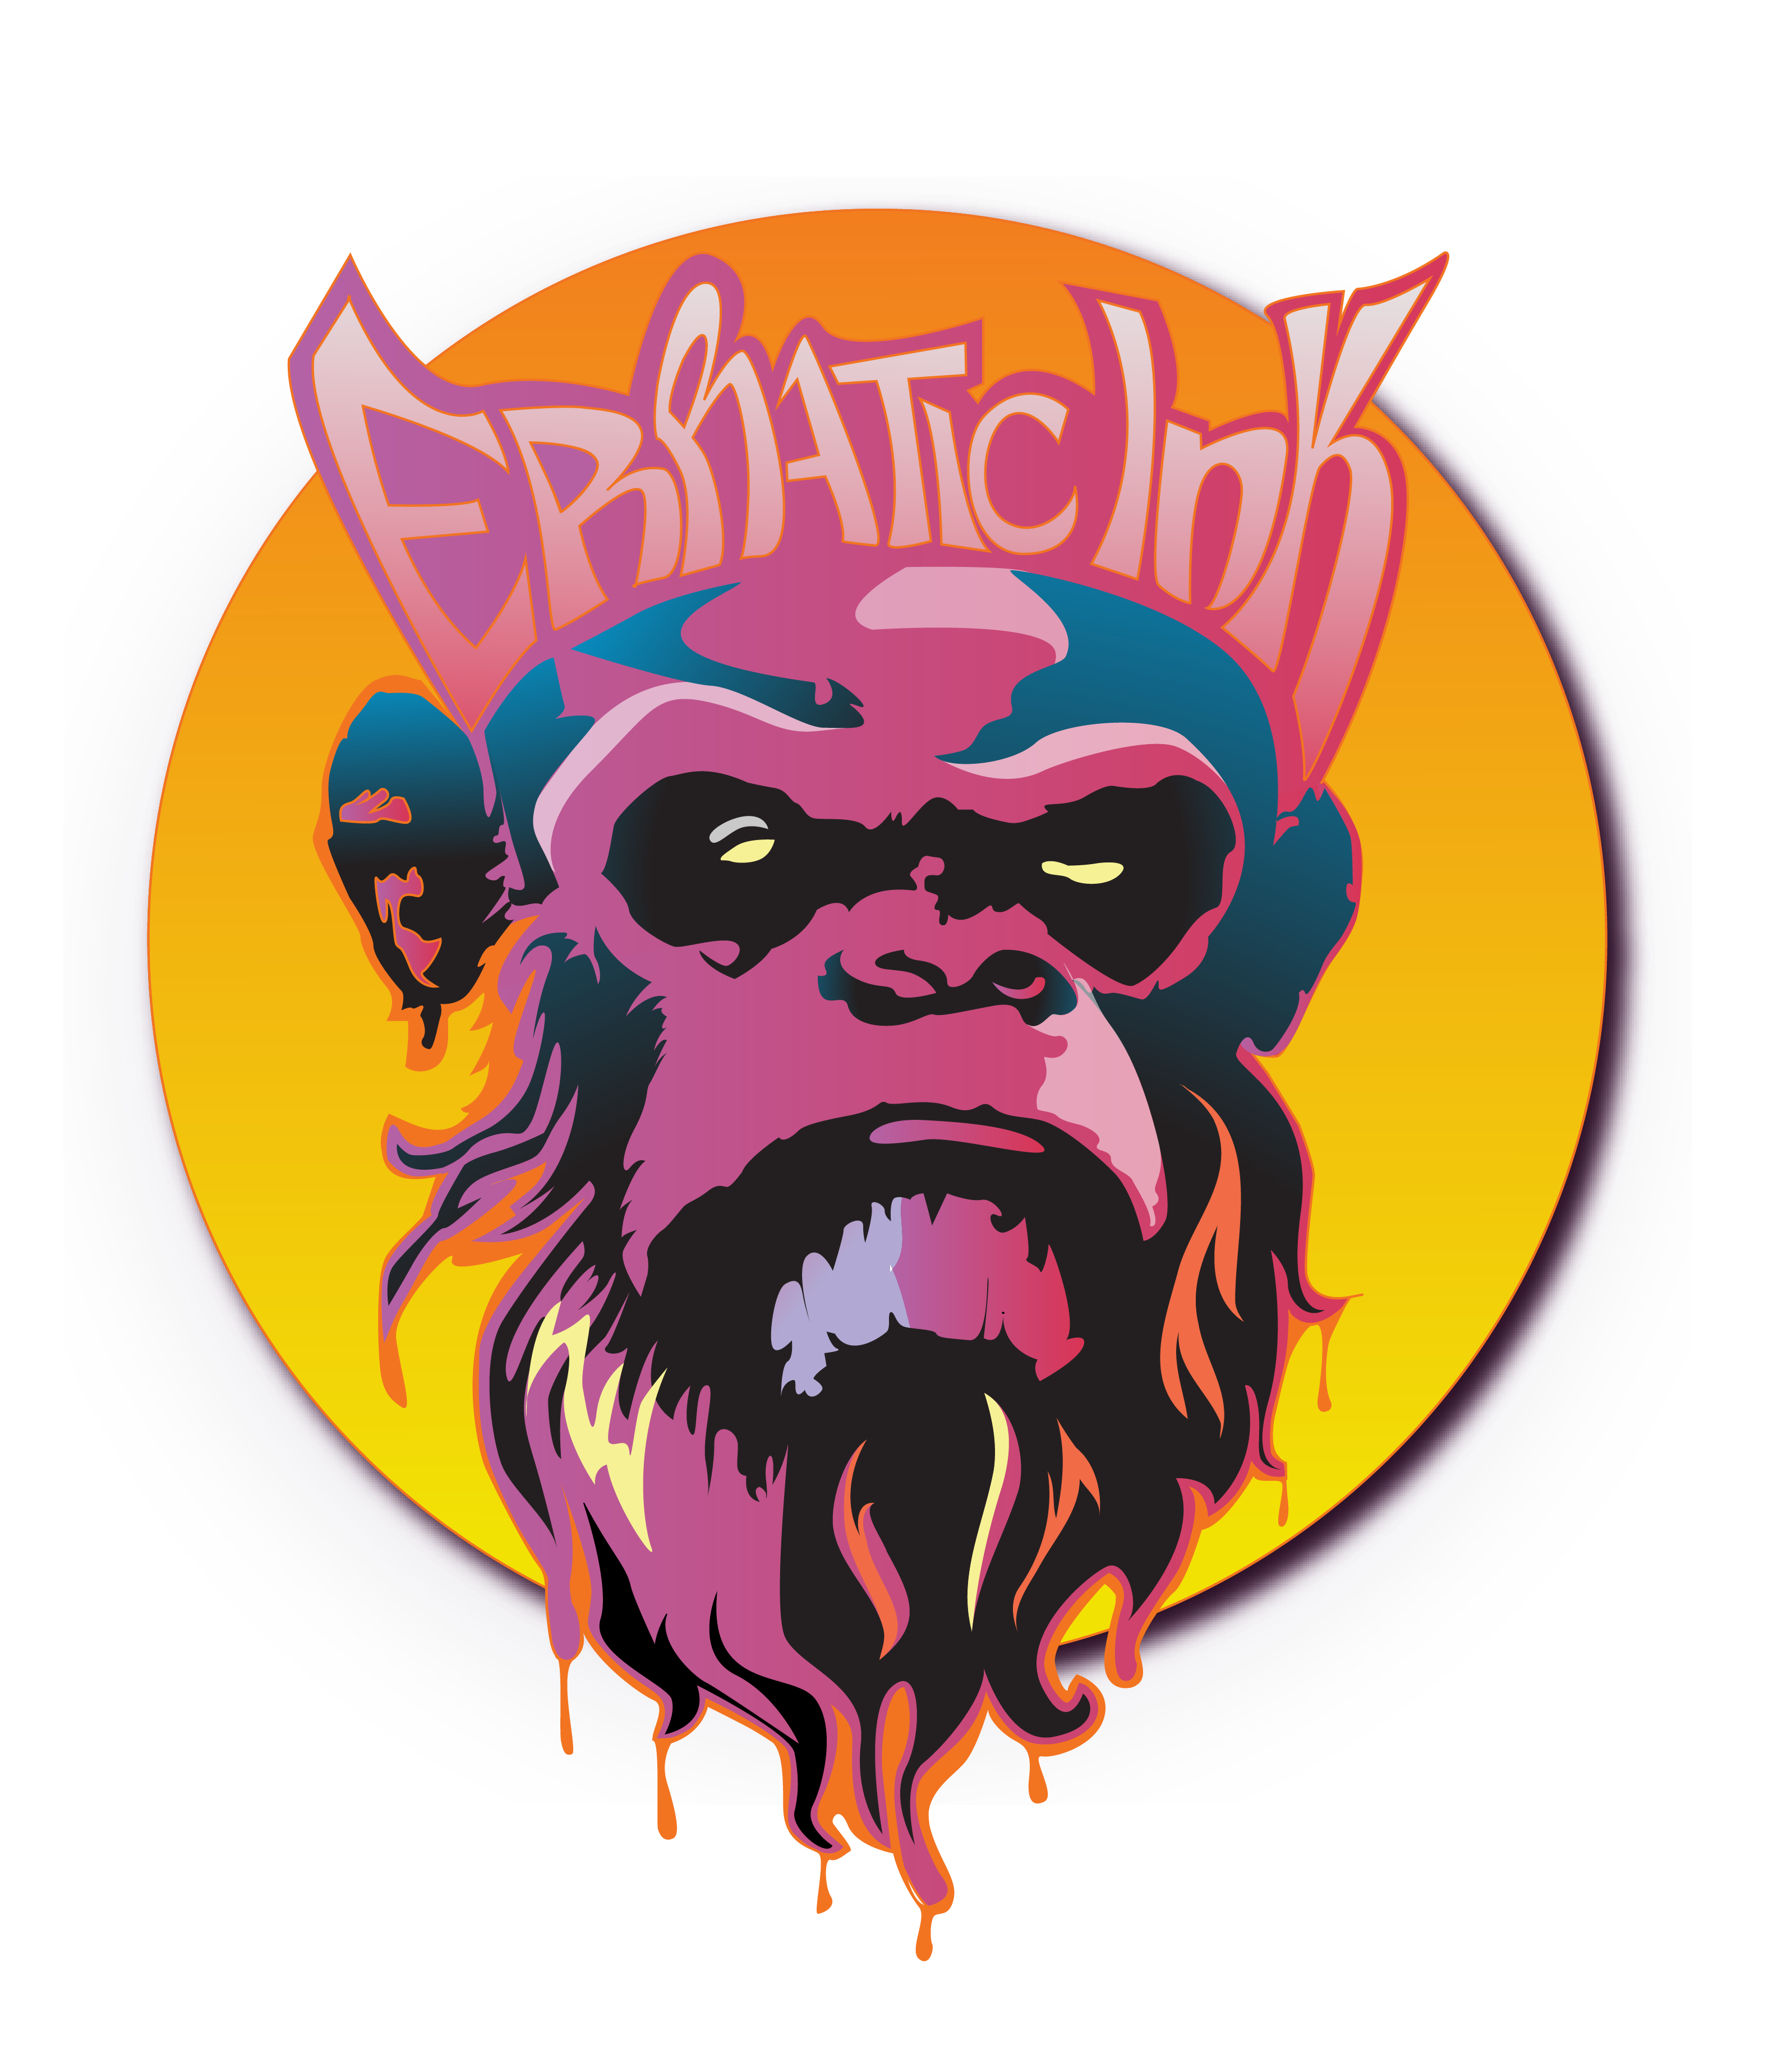 Erratic_Ink_Logo